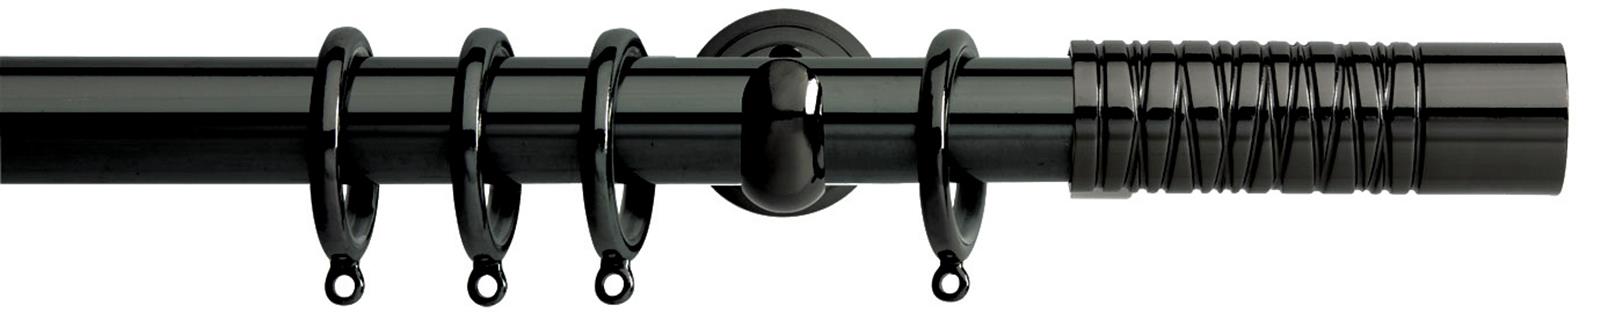 Neo Premium 28mm Pole Black Nickel Cup Wired Barrel